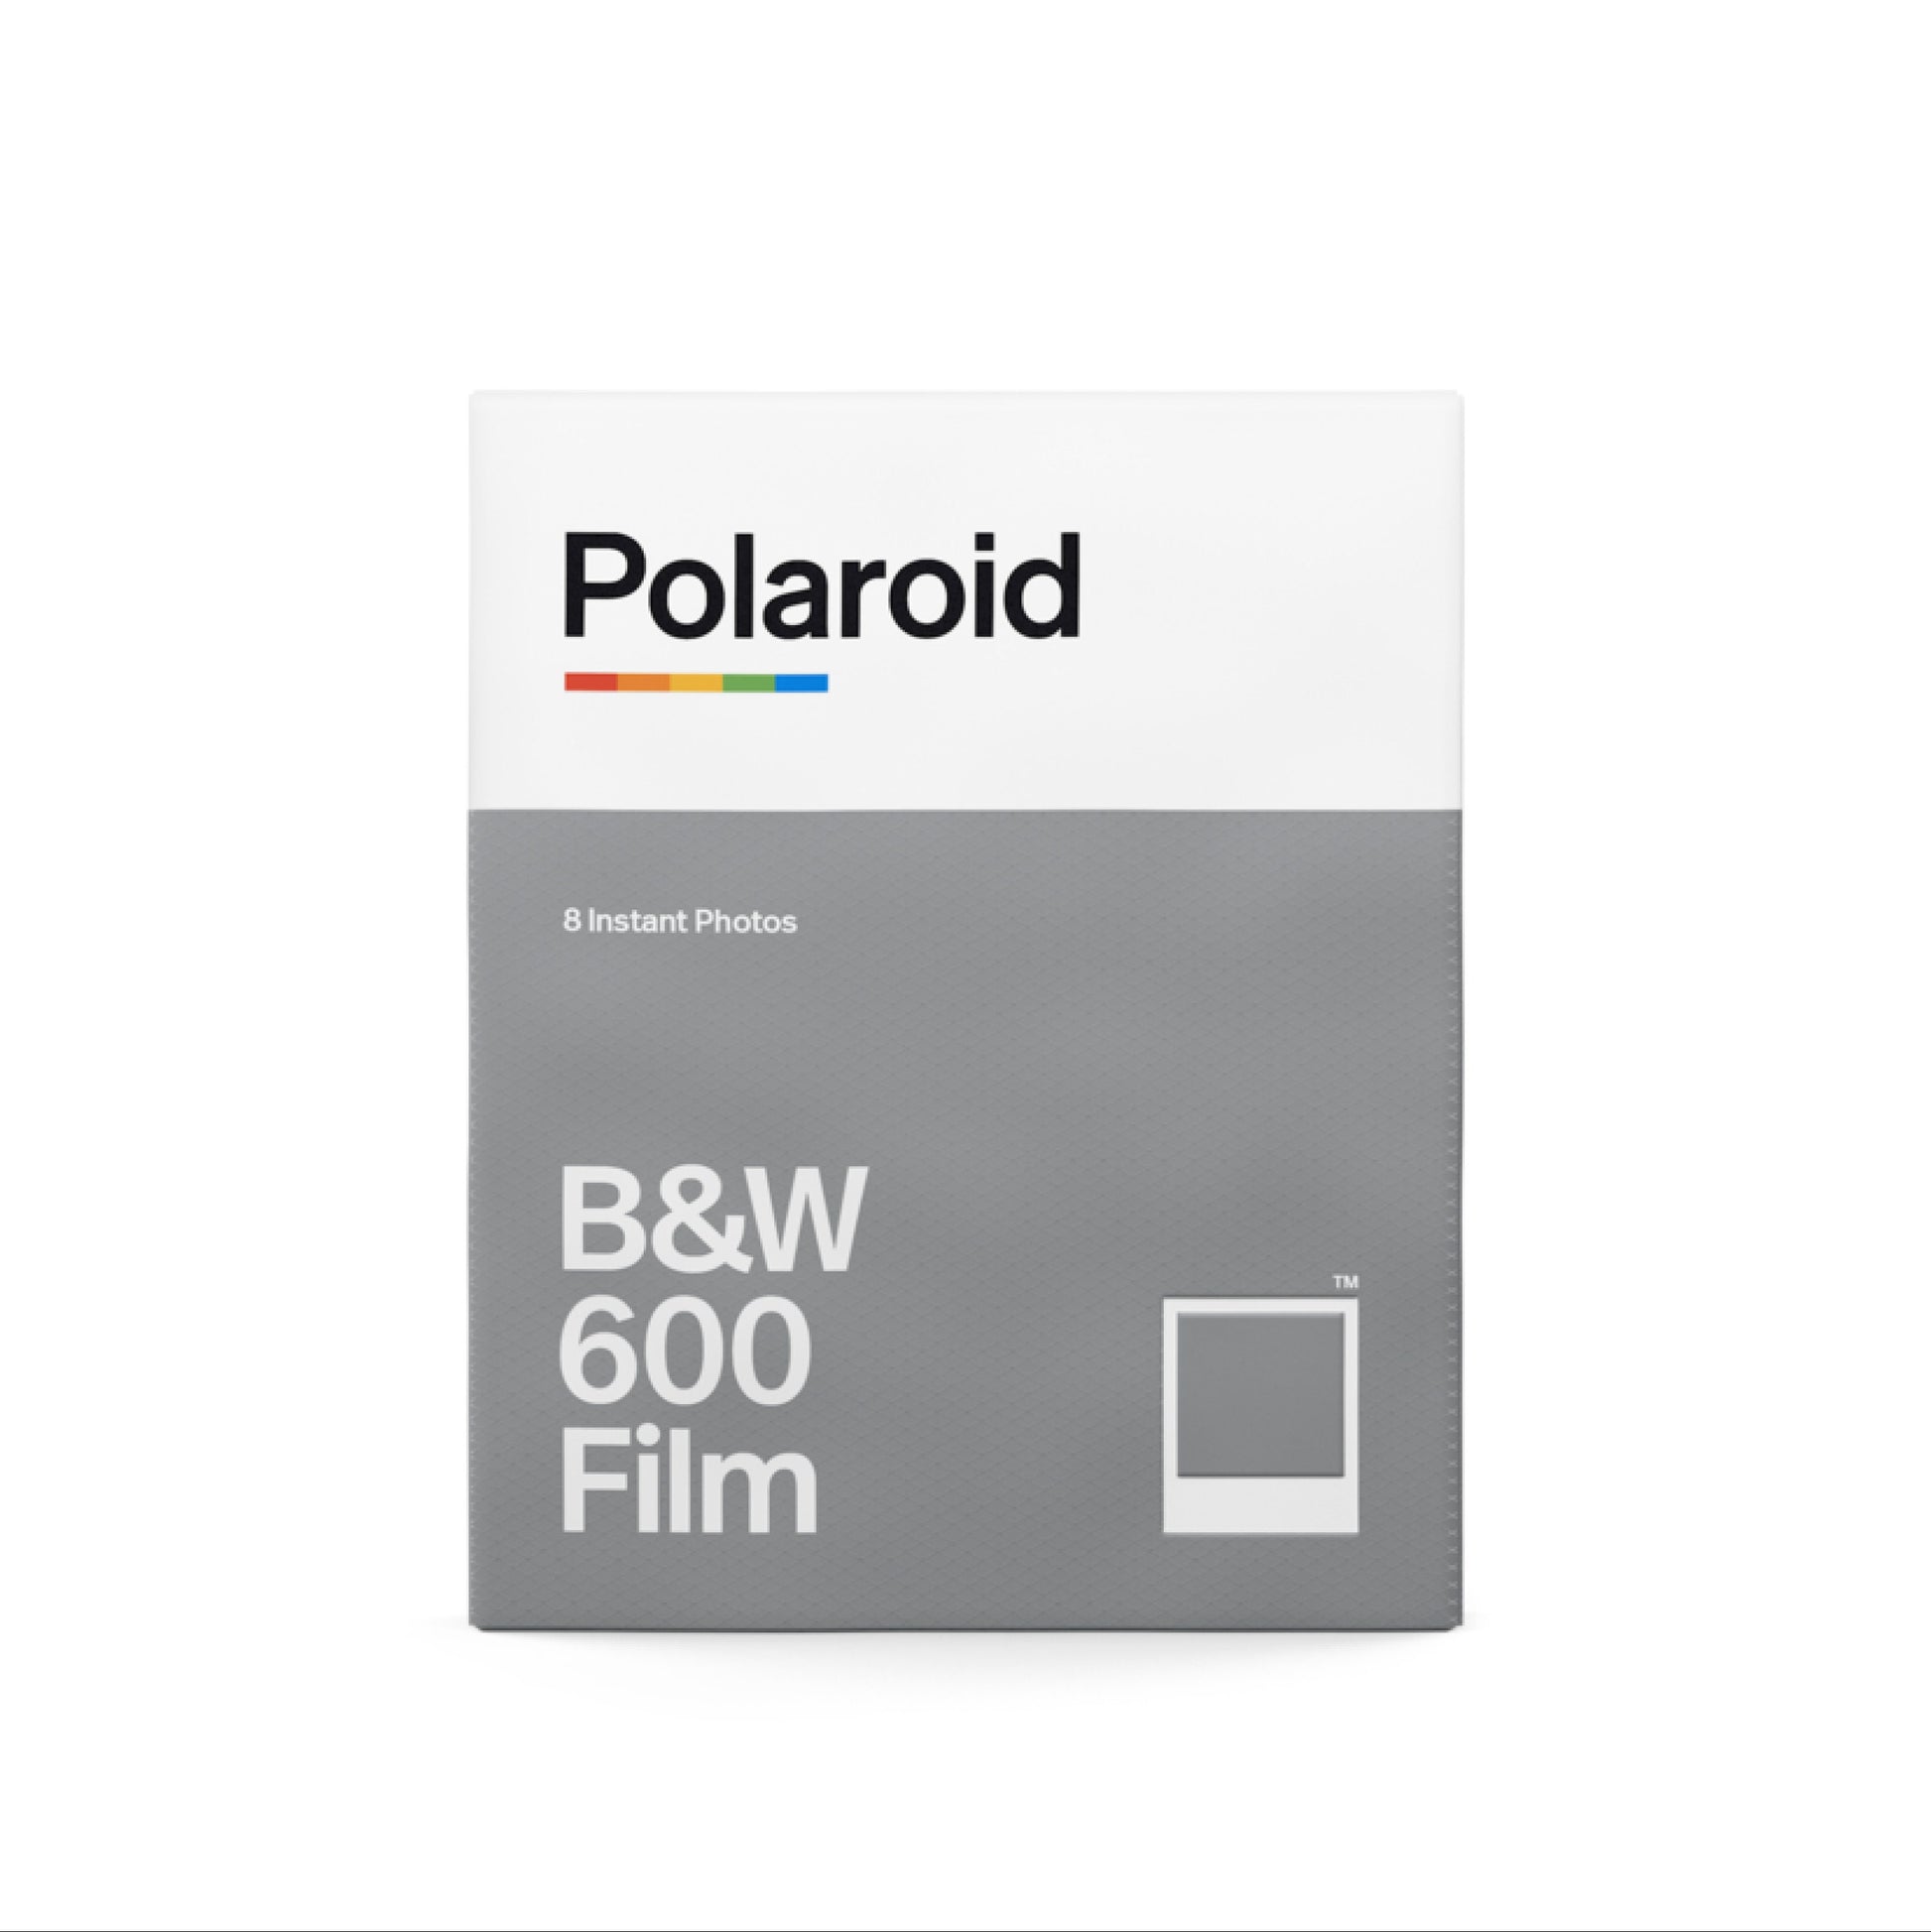 Polaroid 600 Film Variety Pack - 600 Color Film, B&W Film, Color